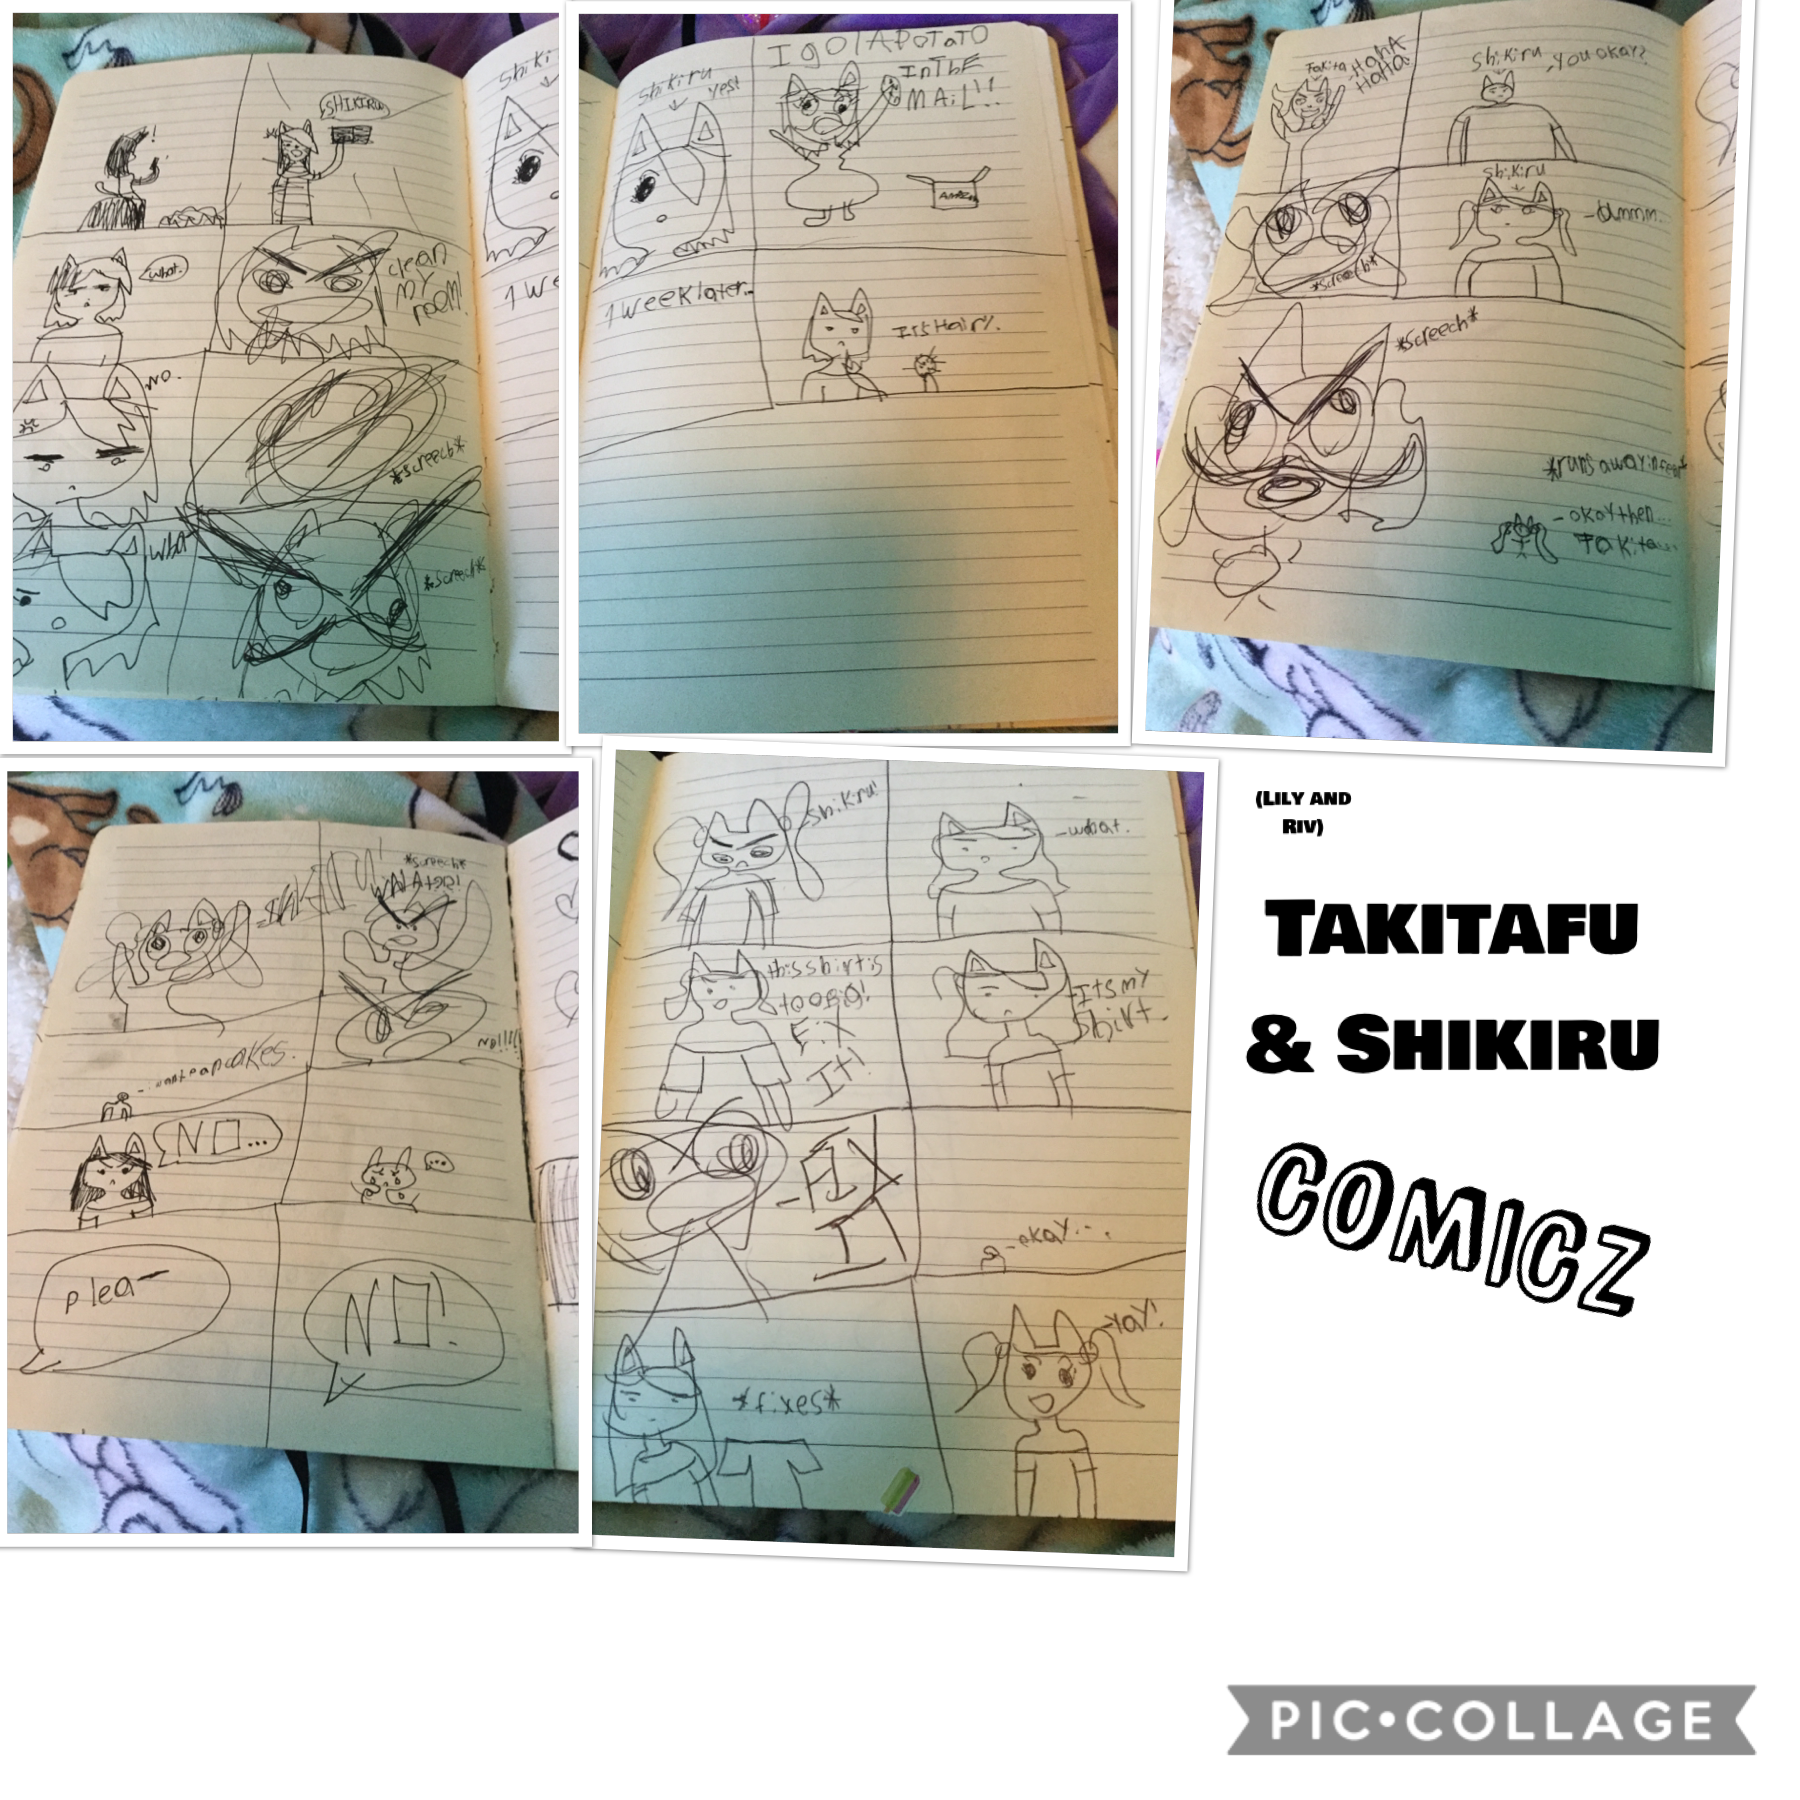 I’m in need of new Takitafu & Shikiru COMICZ ideas! Please put ideas in the comments!